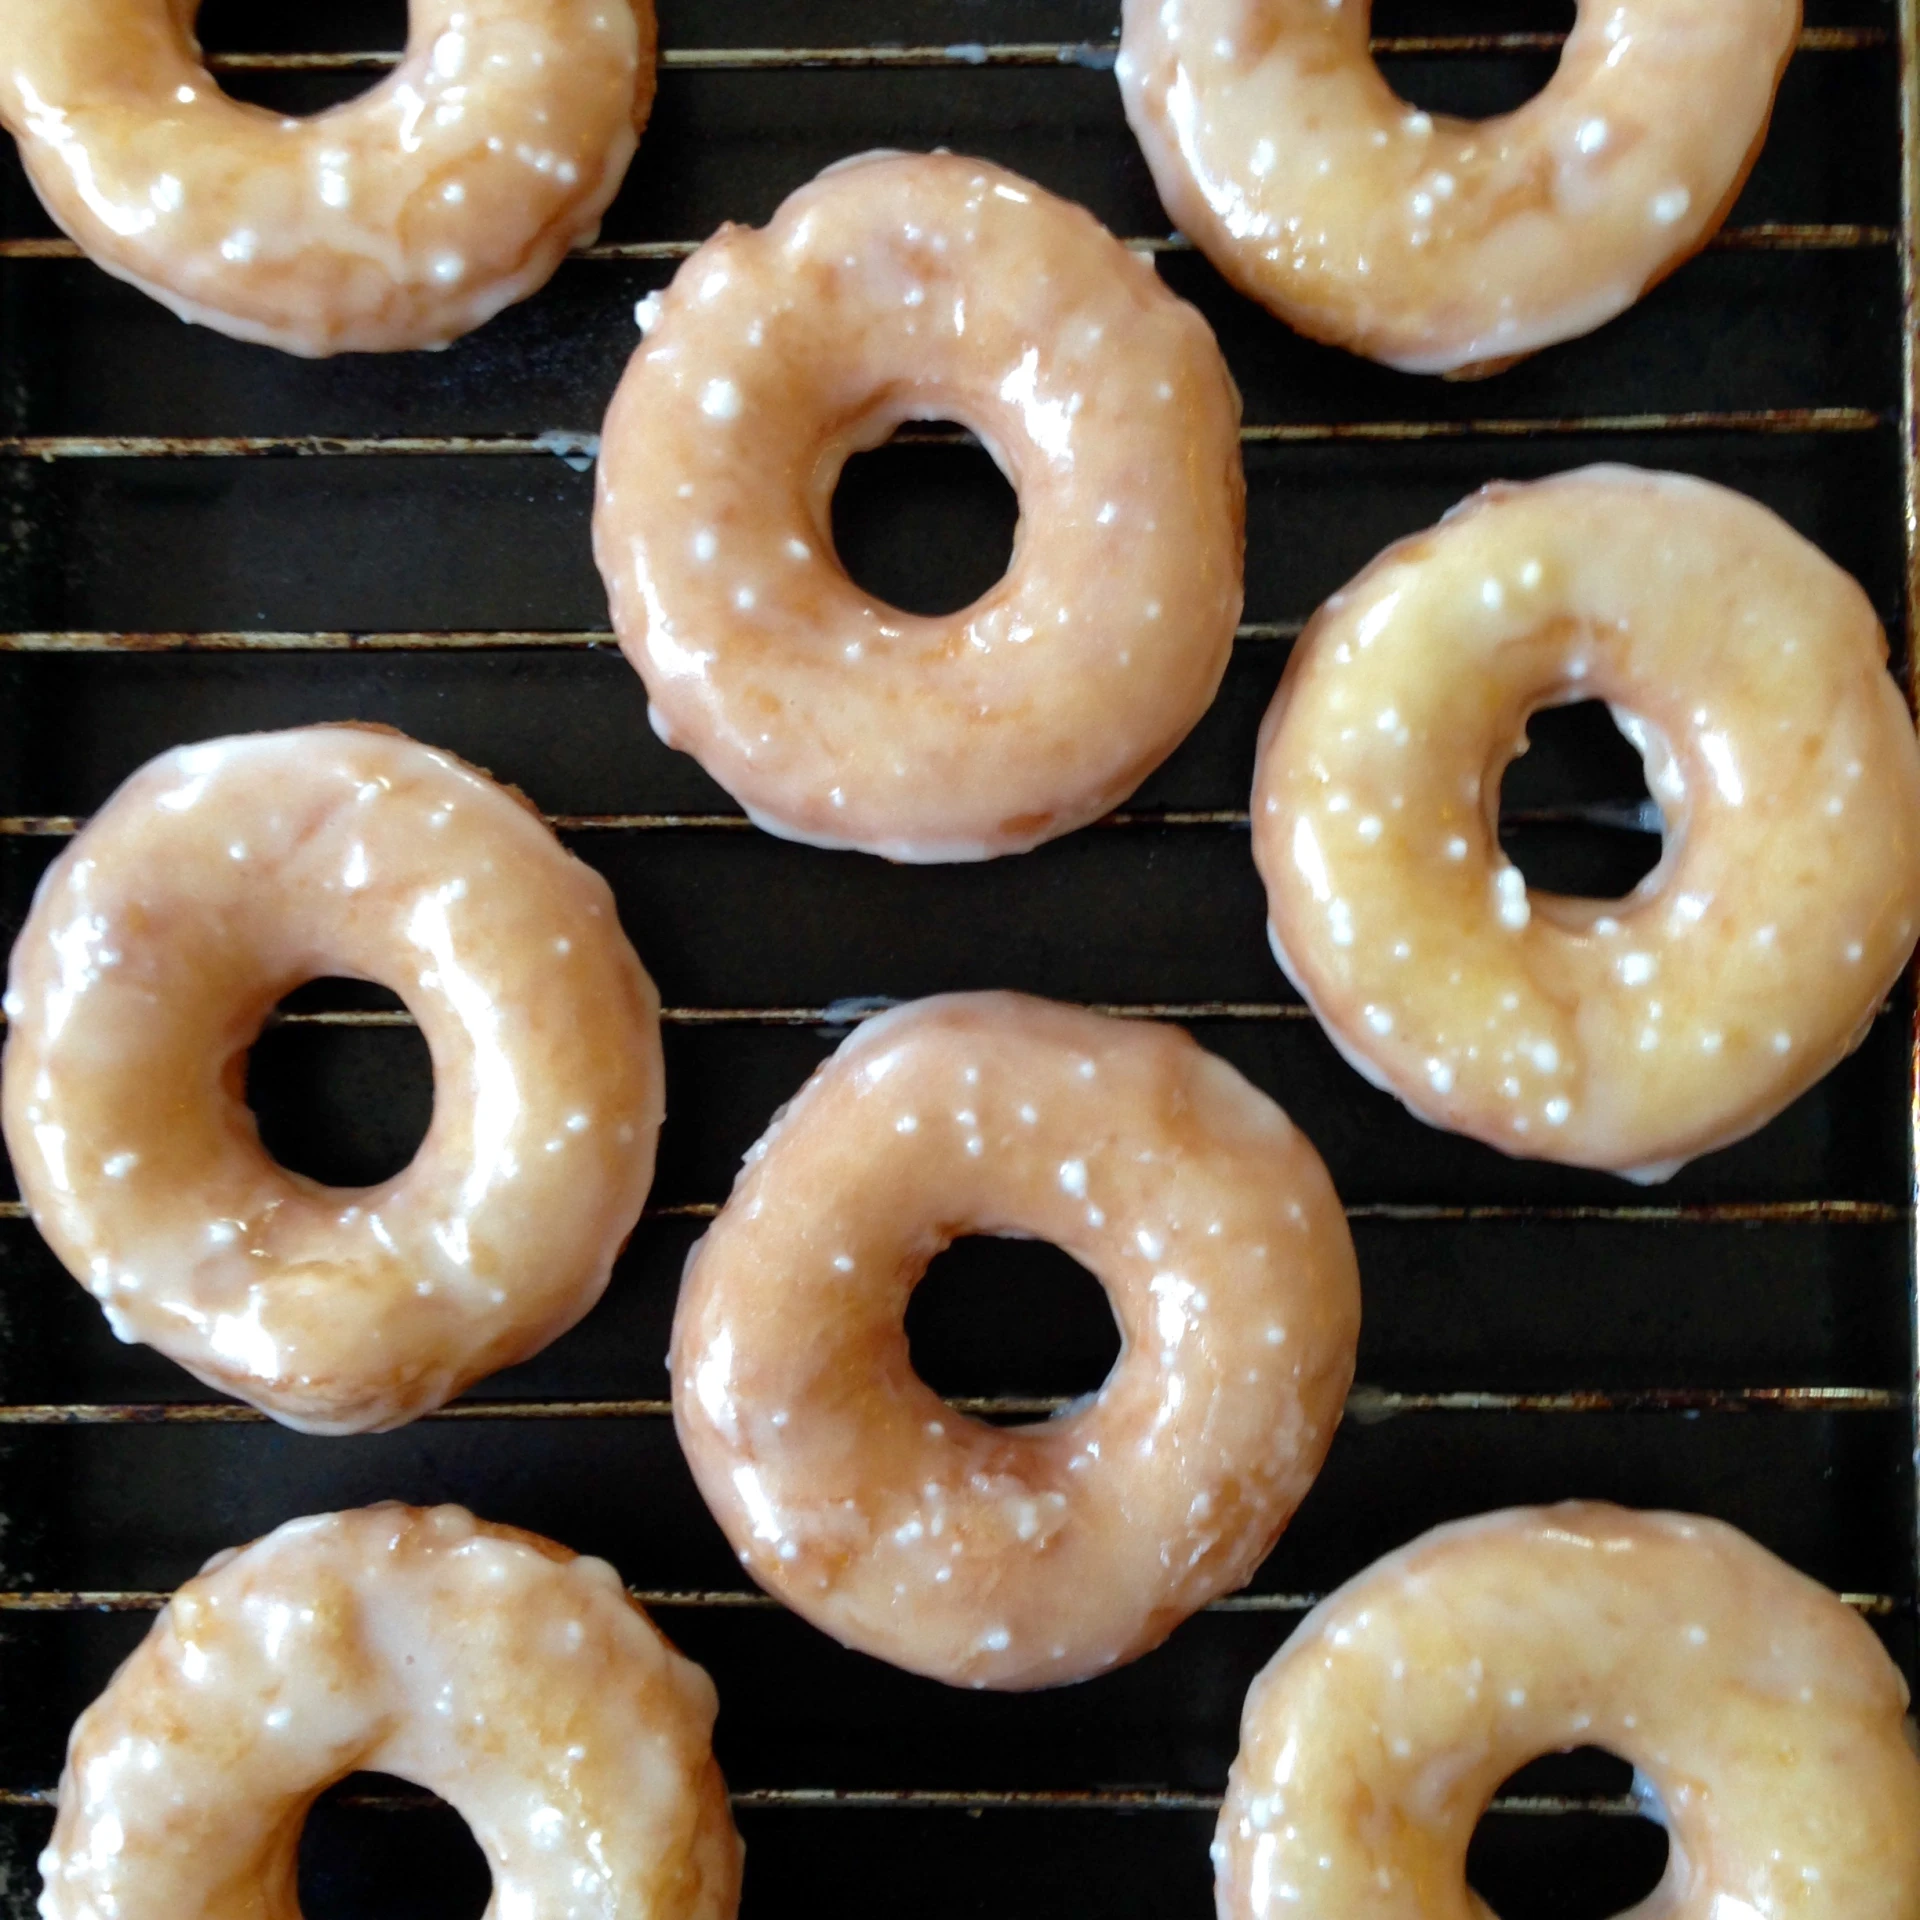 nine glazed doughnuts on a cooling rack